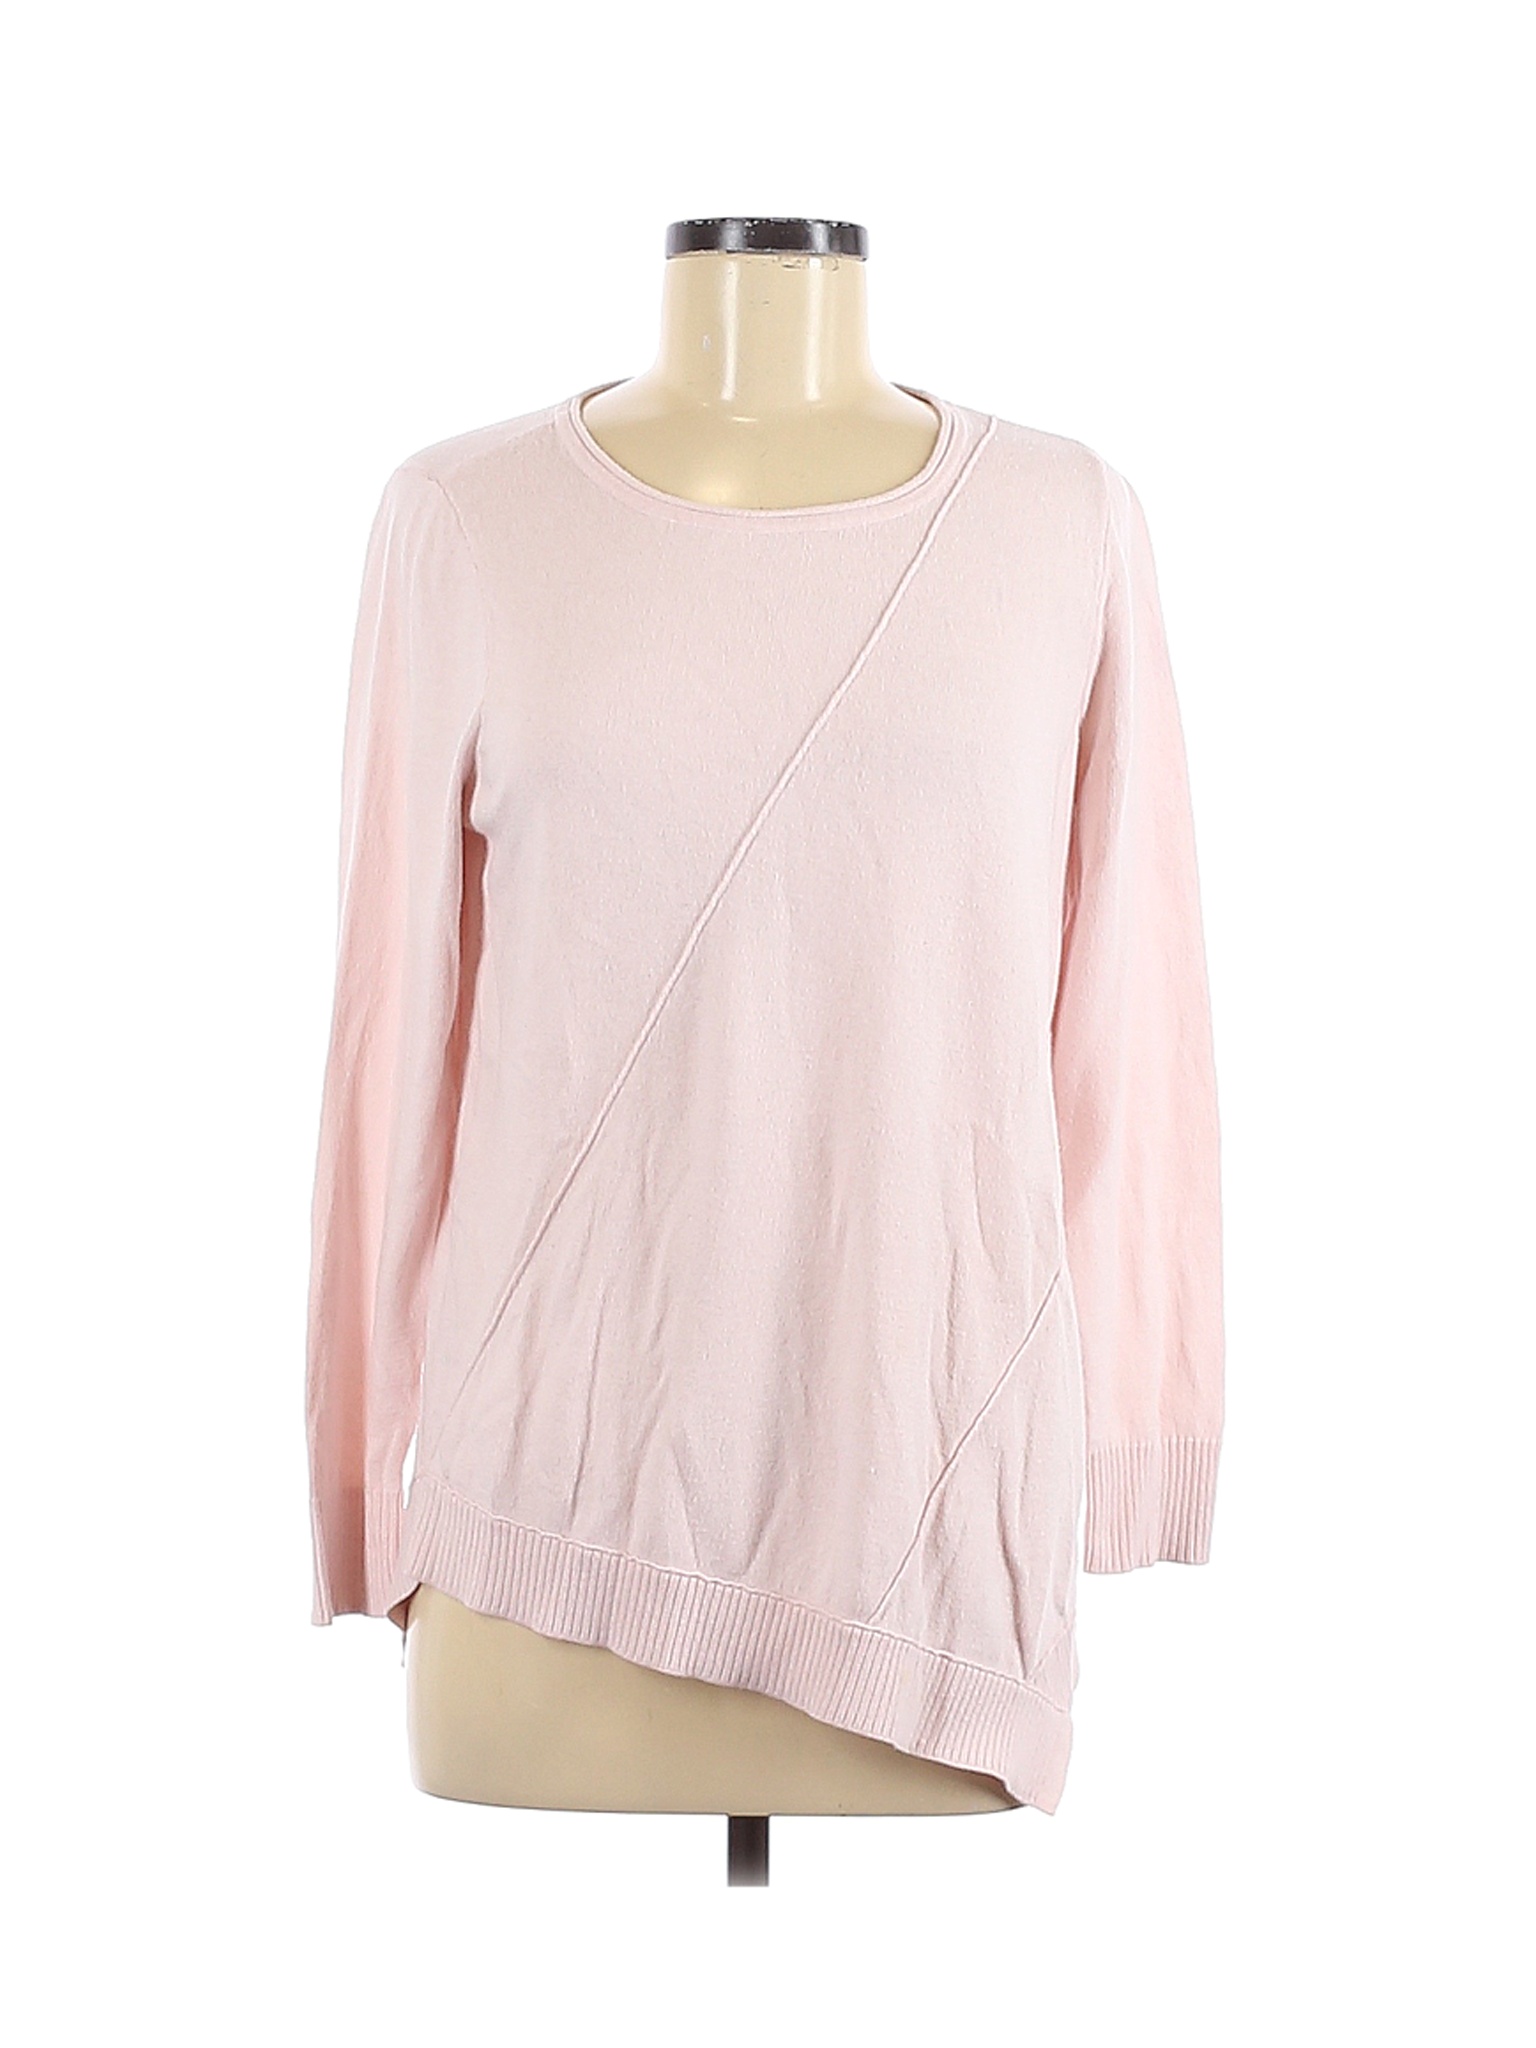 Chico's Women Pink Pullover Sweater M | eBay